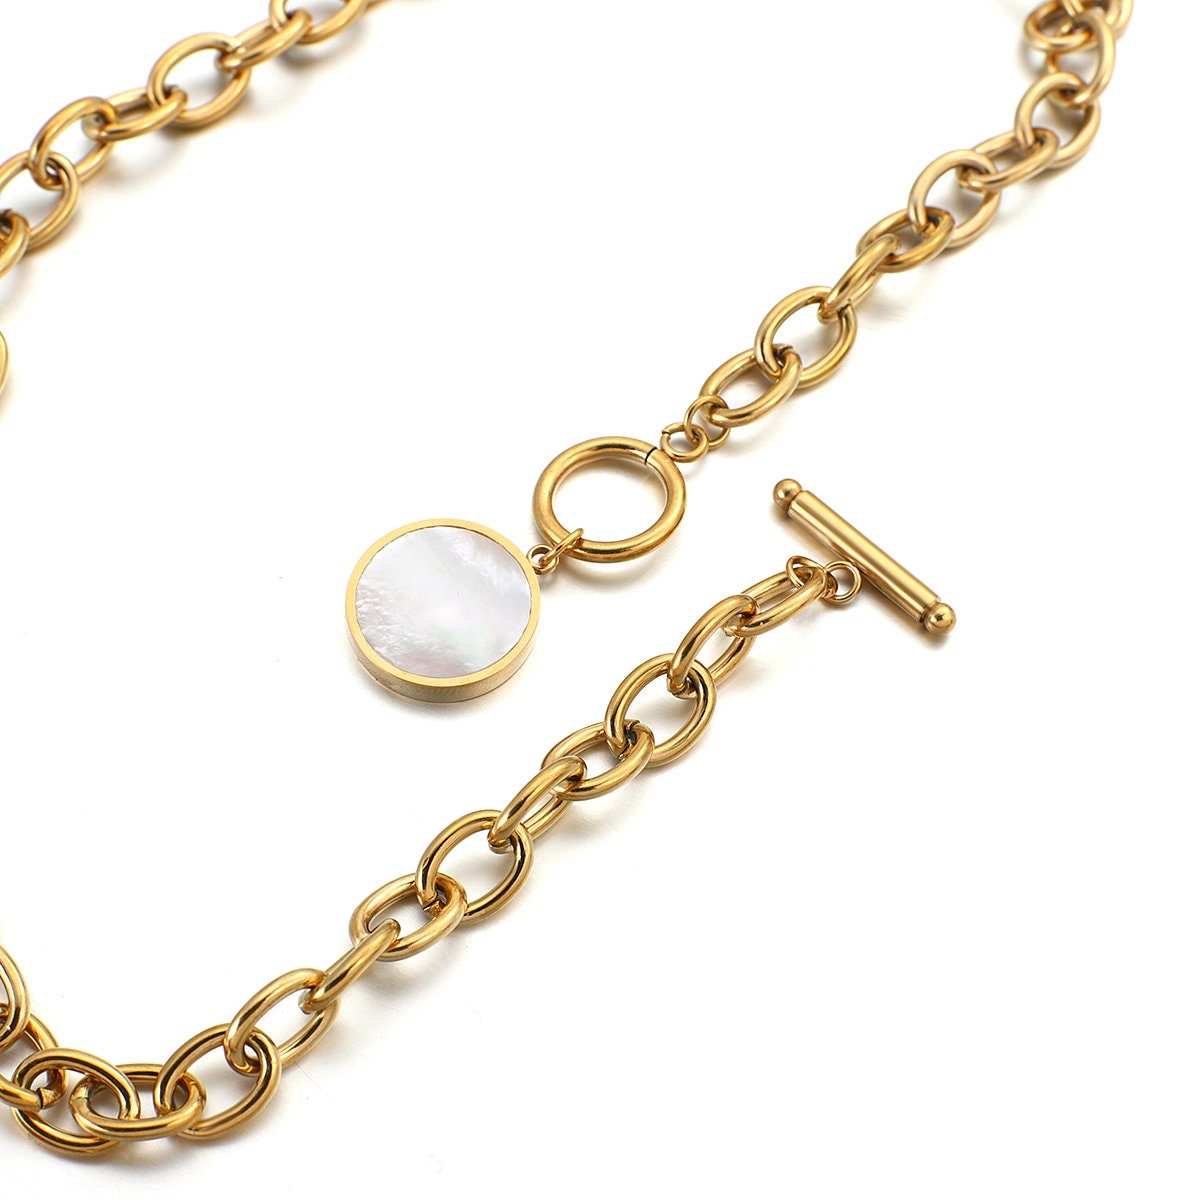 Elegant Gold  Punk Collar Necklace-Silver Chain Necklace- Coin Pendant Necklace- Thick Chain Gold Necklace- Gold Chain Necklace-Gift For Her